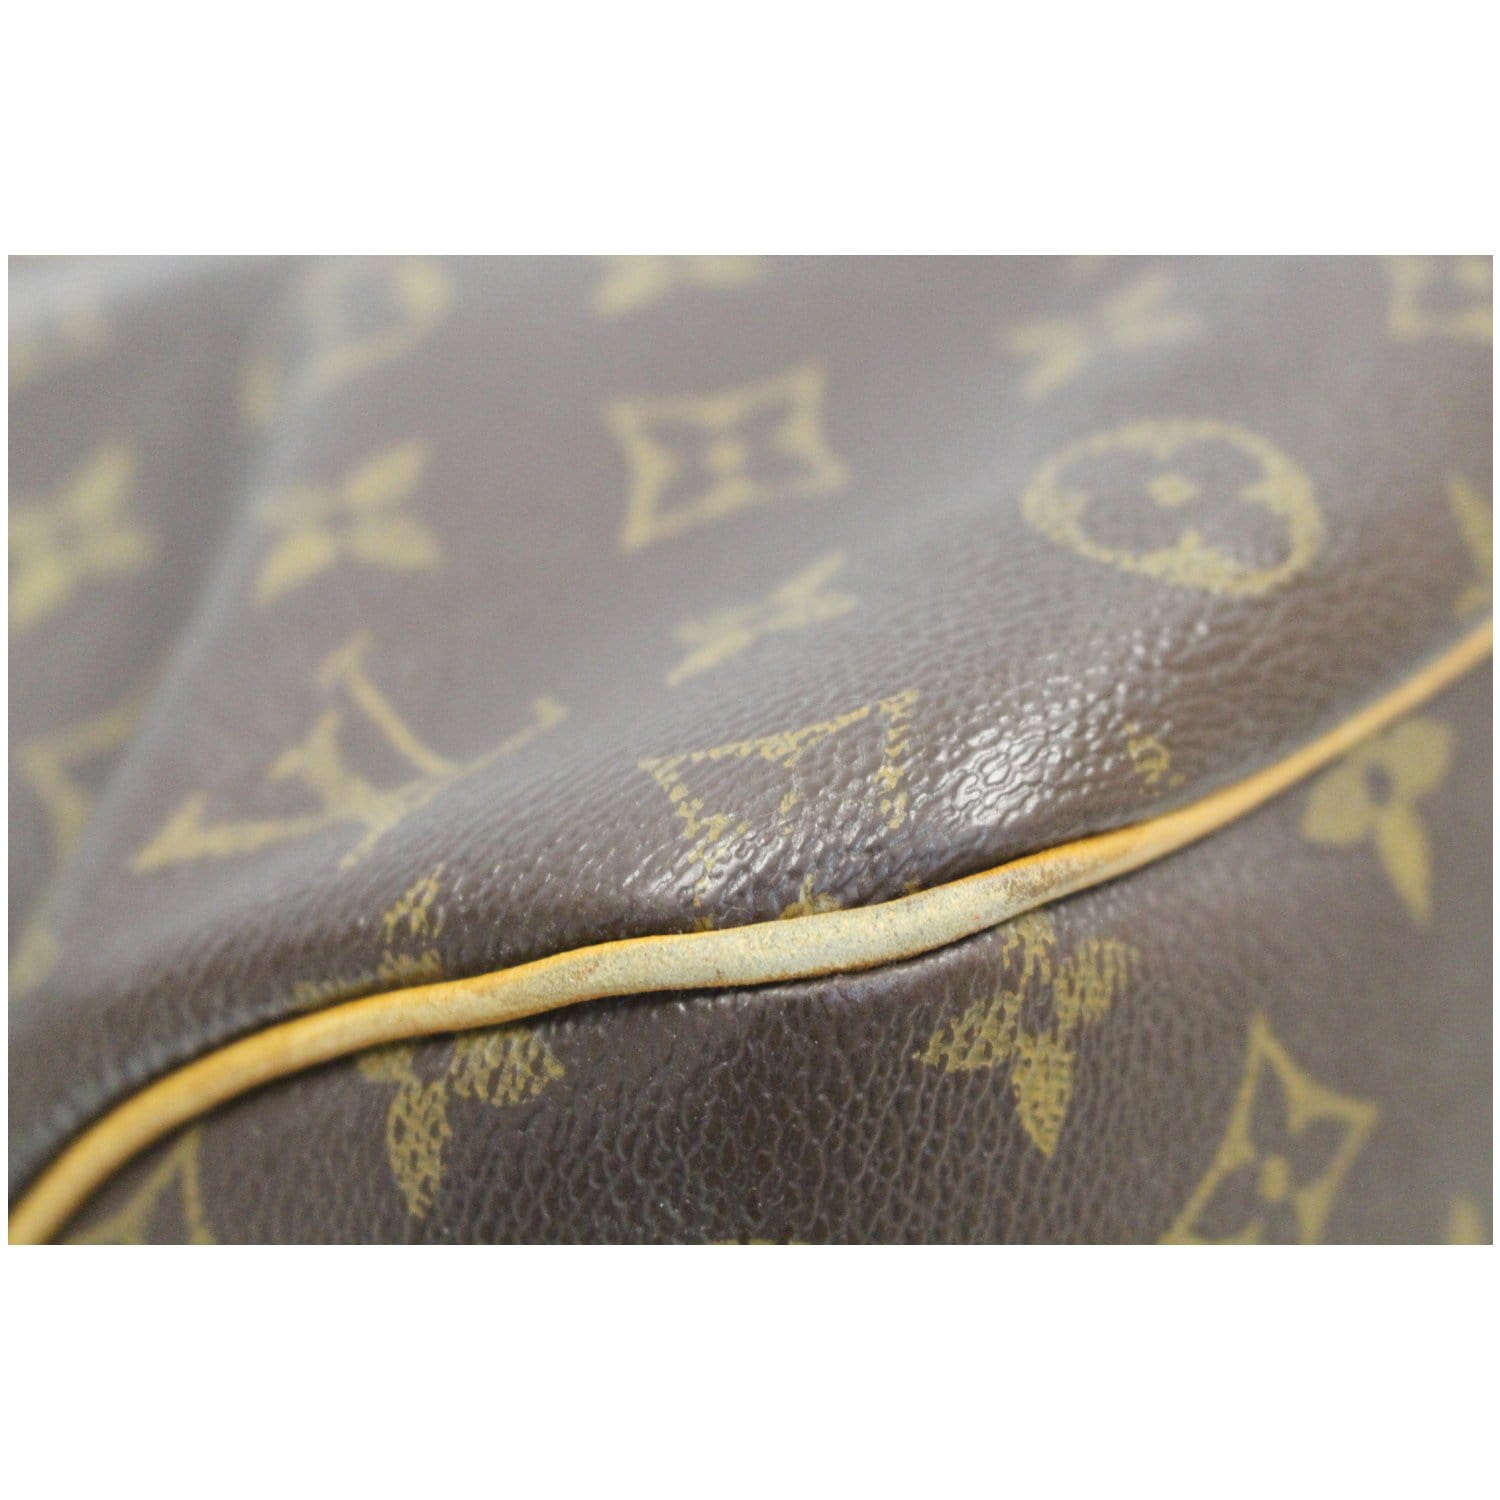 Louis Vuitton, Bags, 985 Vintage Louis Vuitton 45 Keepall